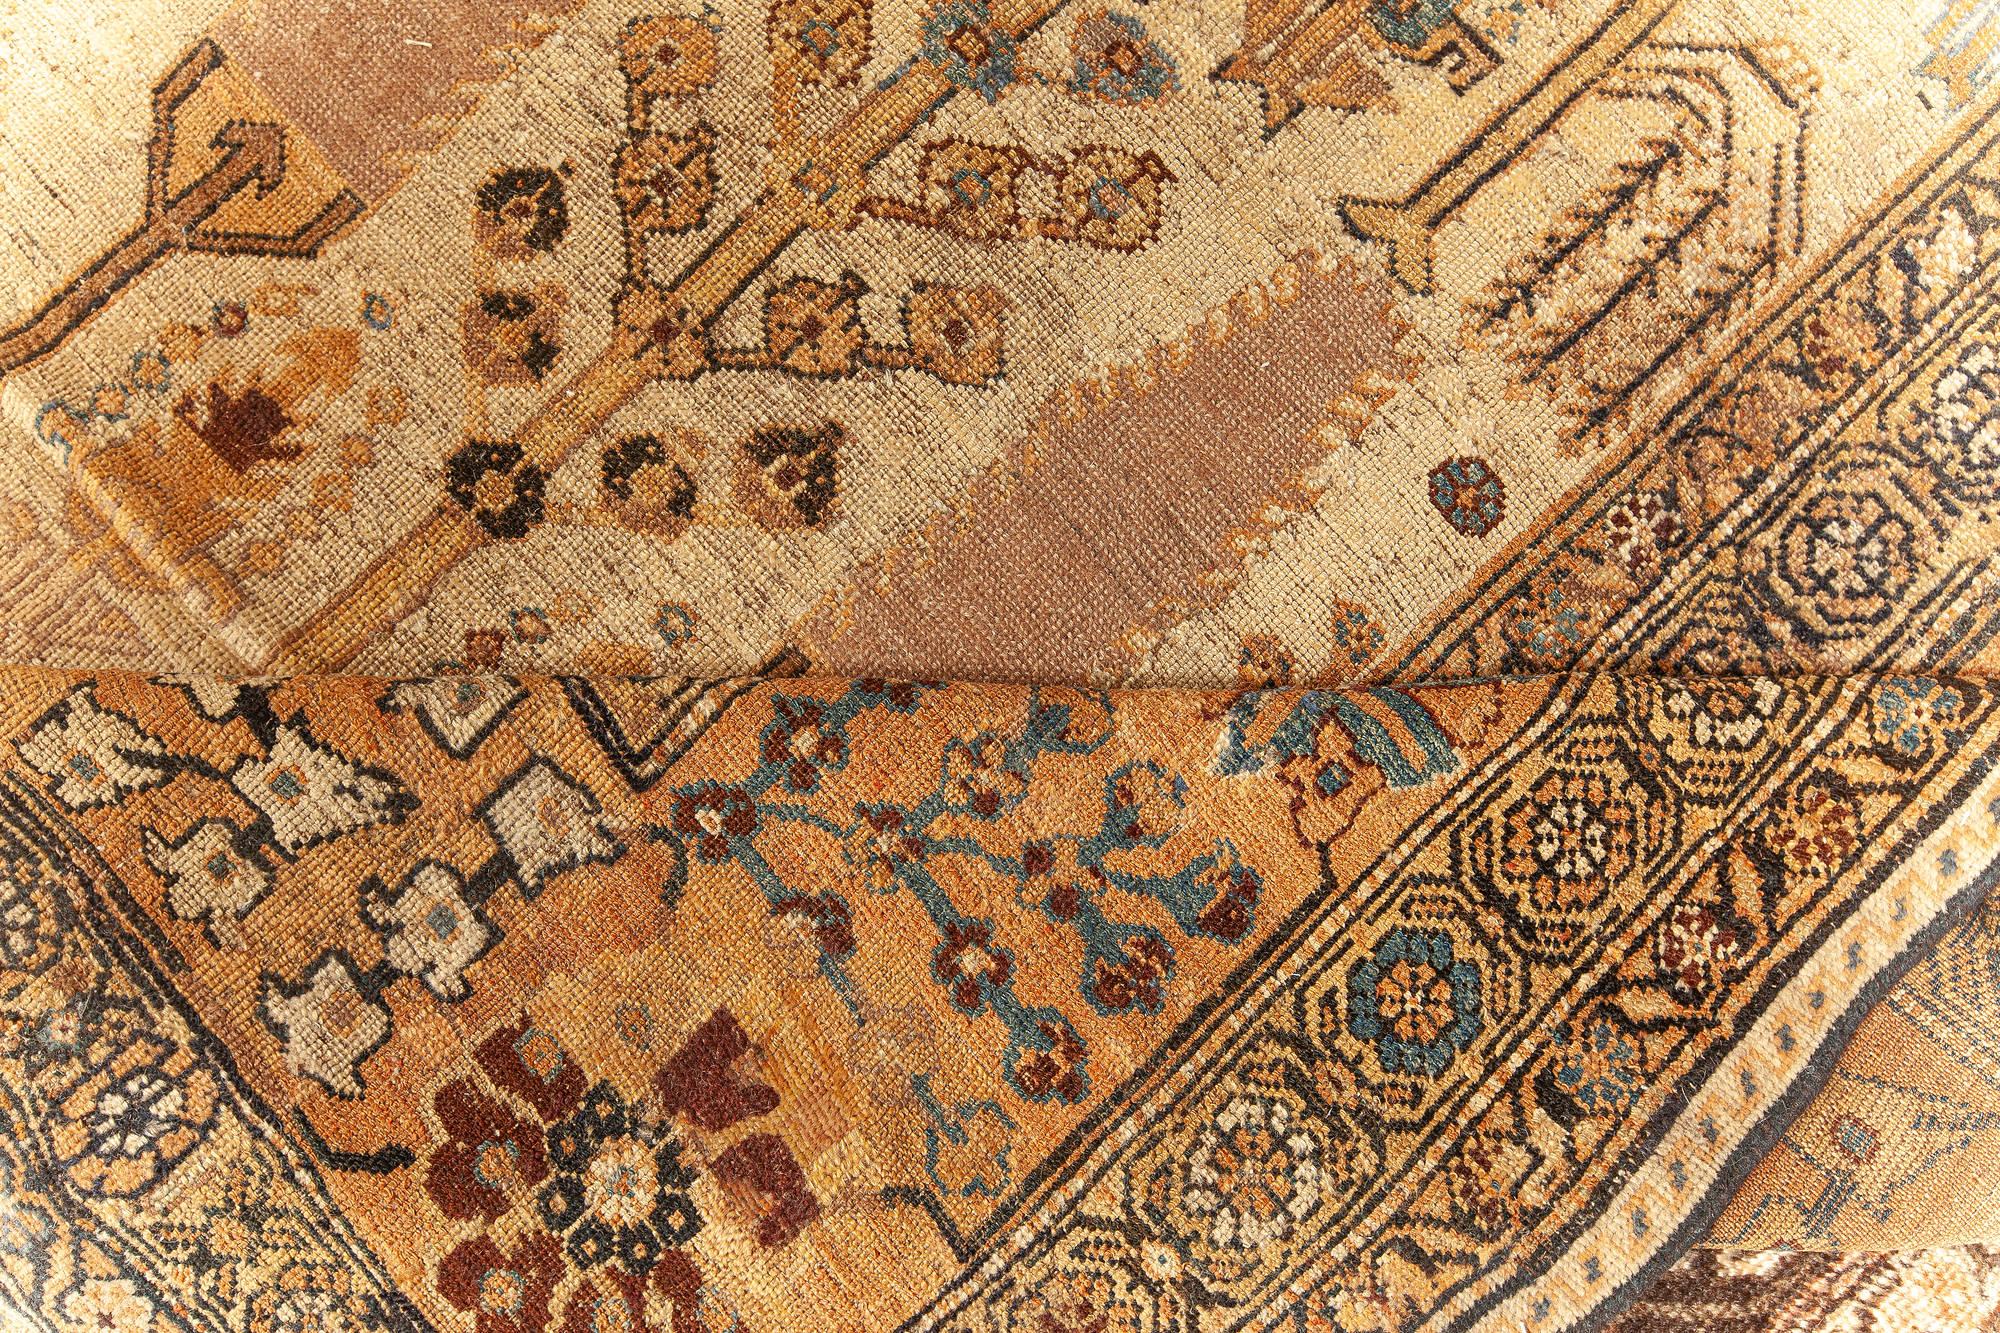 Authentic Persian Bakhtiari Handmade Wool Rug
Size: 14'6